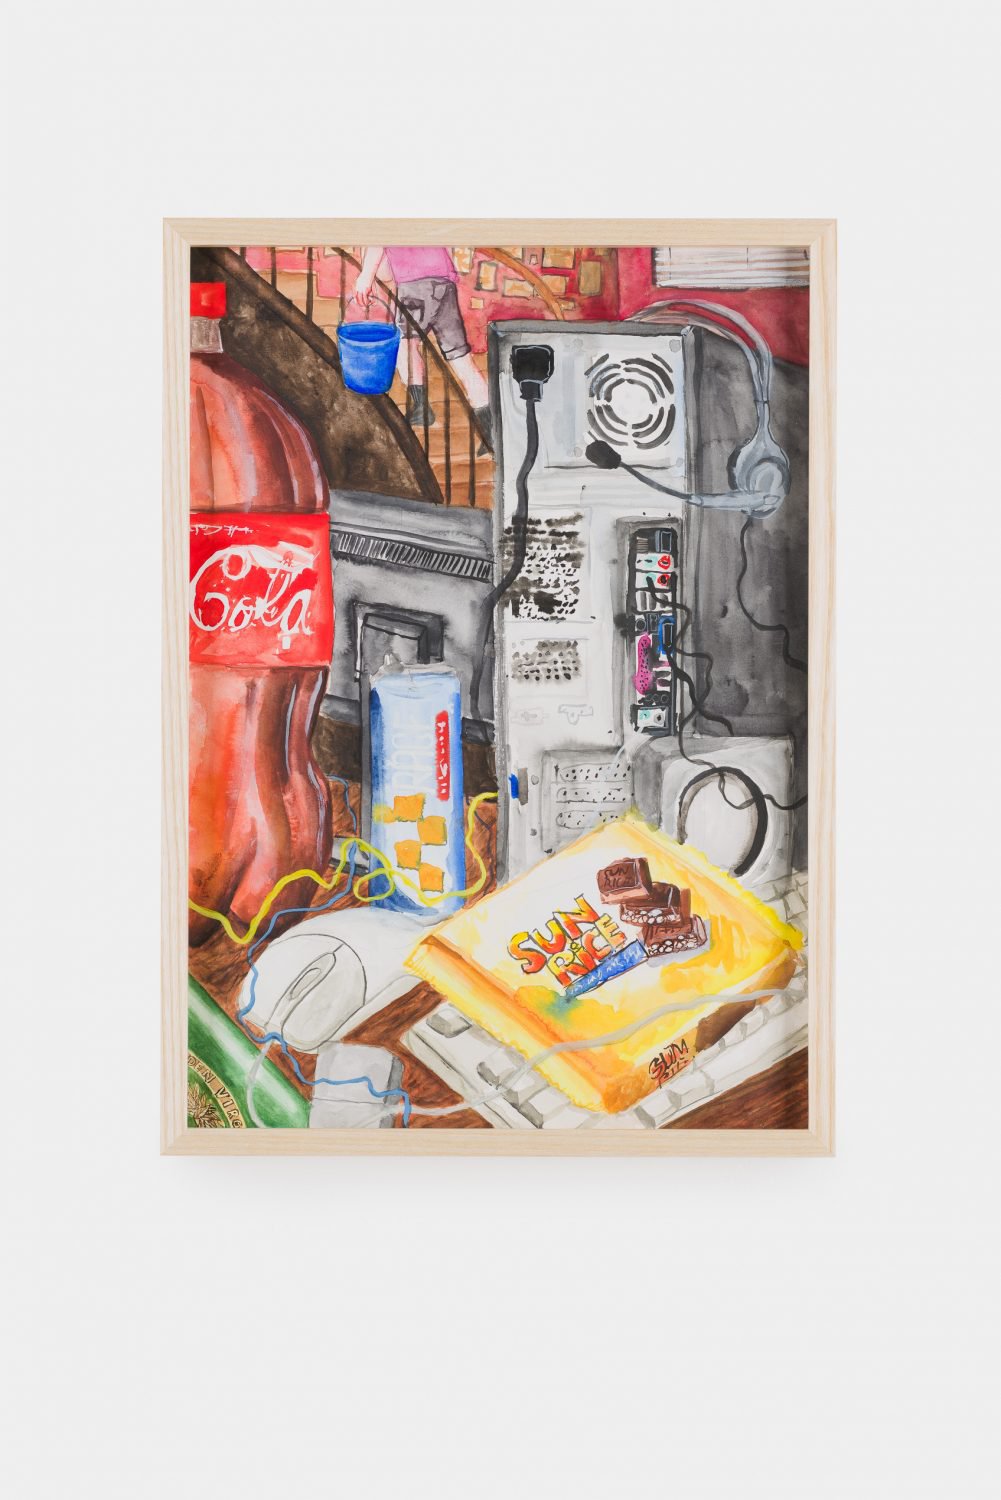 Matthias NogglerUT2K4, 2018Watercolor and pencil on paper44.1 x 31.8 cm